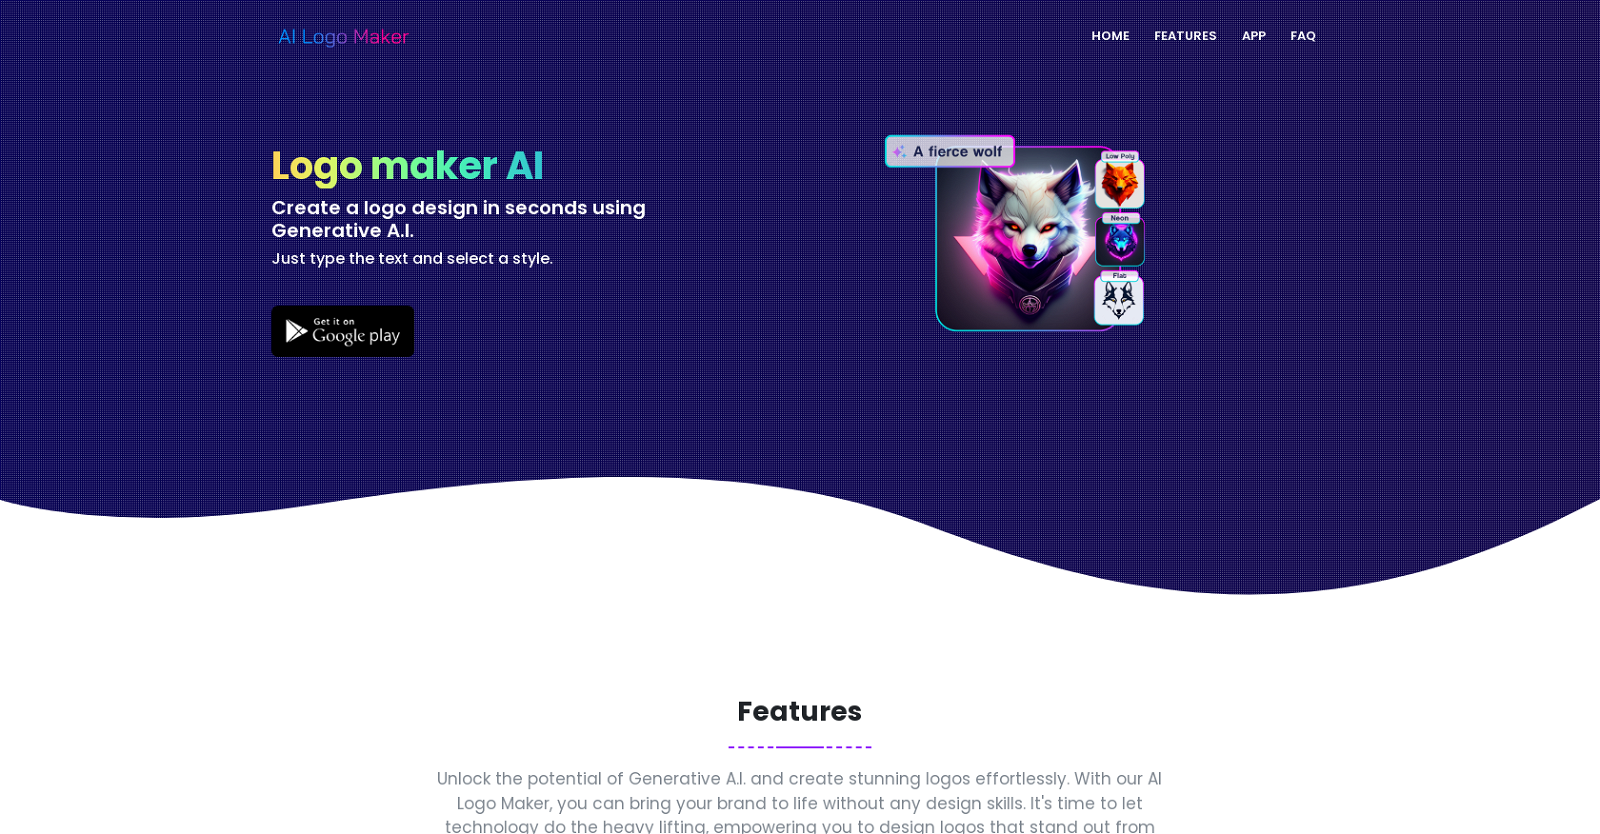 Logo Maker & Logo Creator - Apps on Google Play